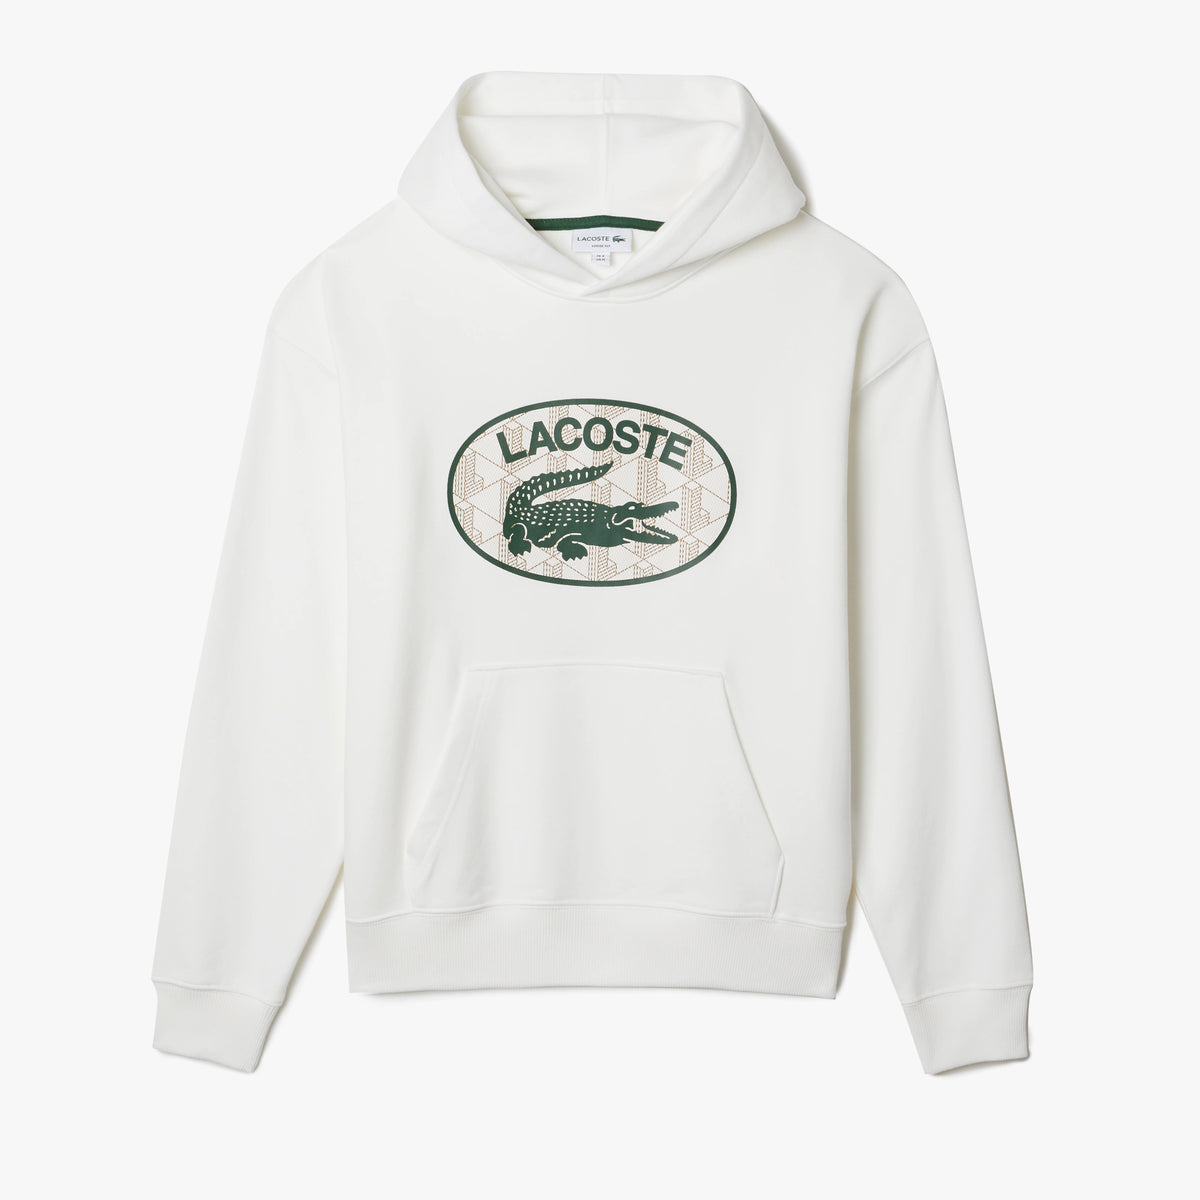 Lacoste - Branded Monogram Hooded Sweatshirt - White